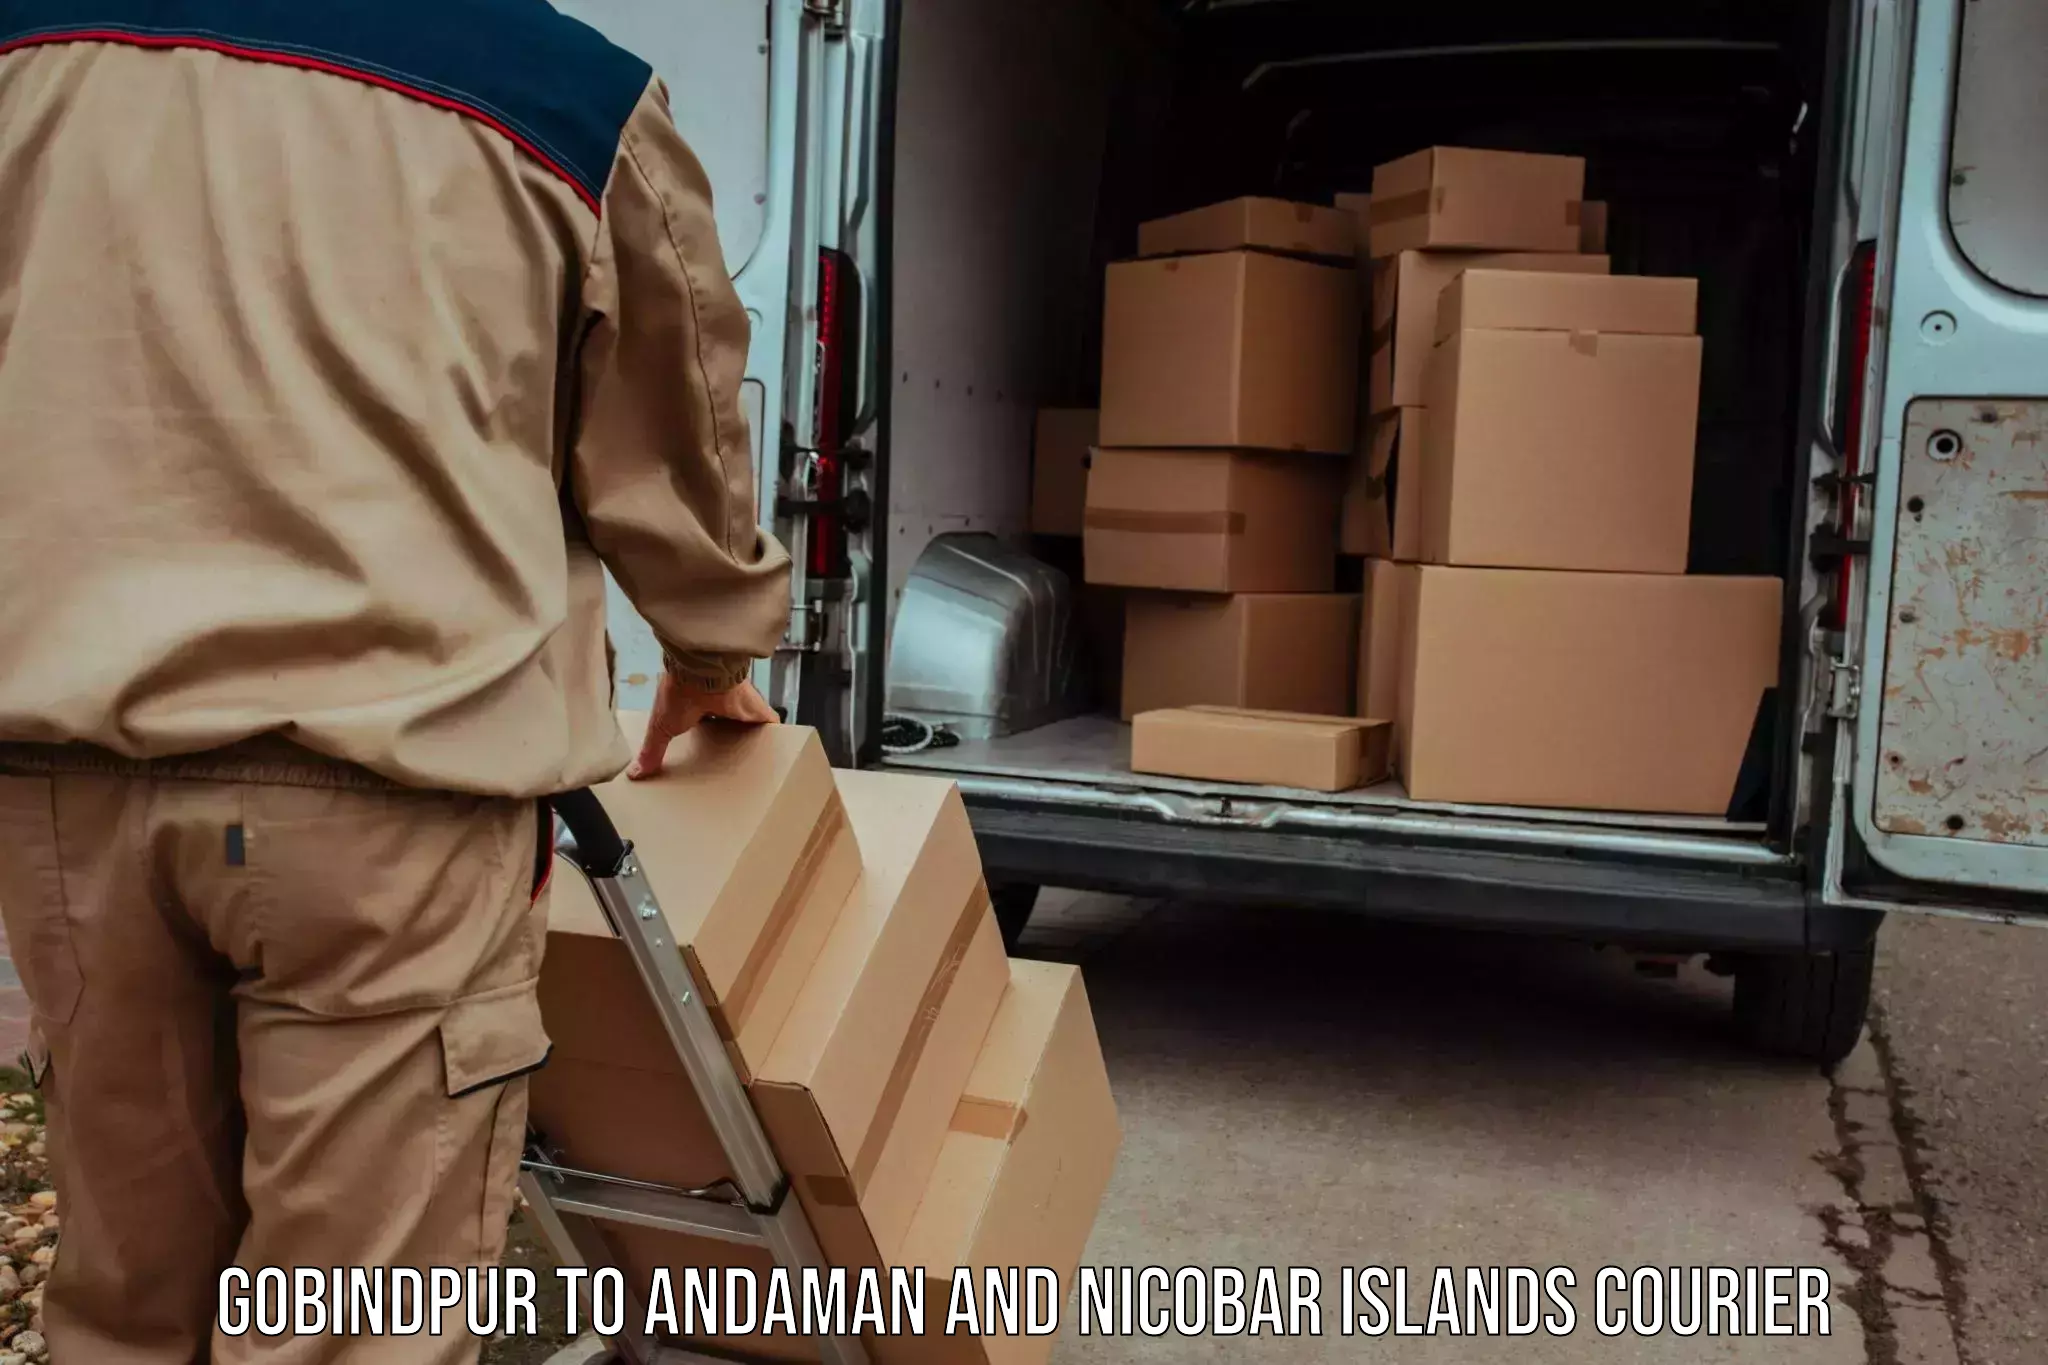 Logistics service provider Gobindpur to Andaman and Nicobar Islands